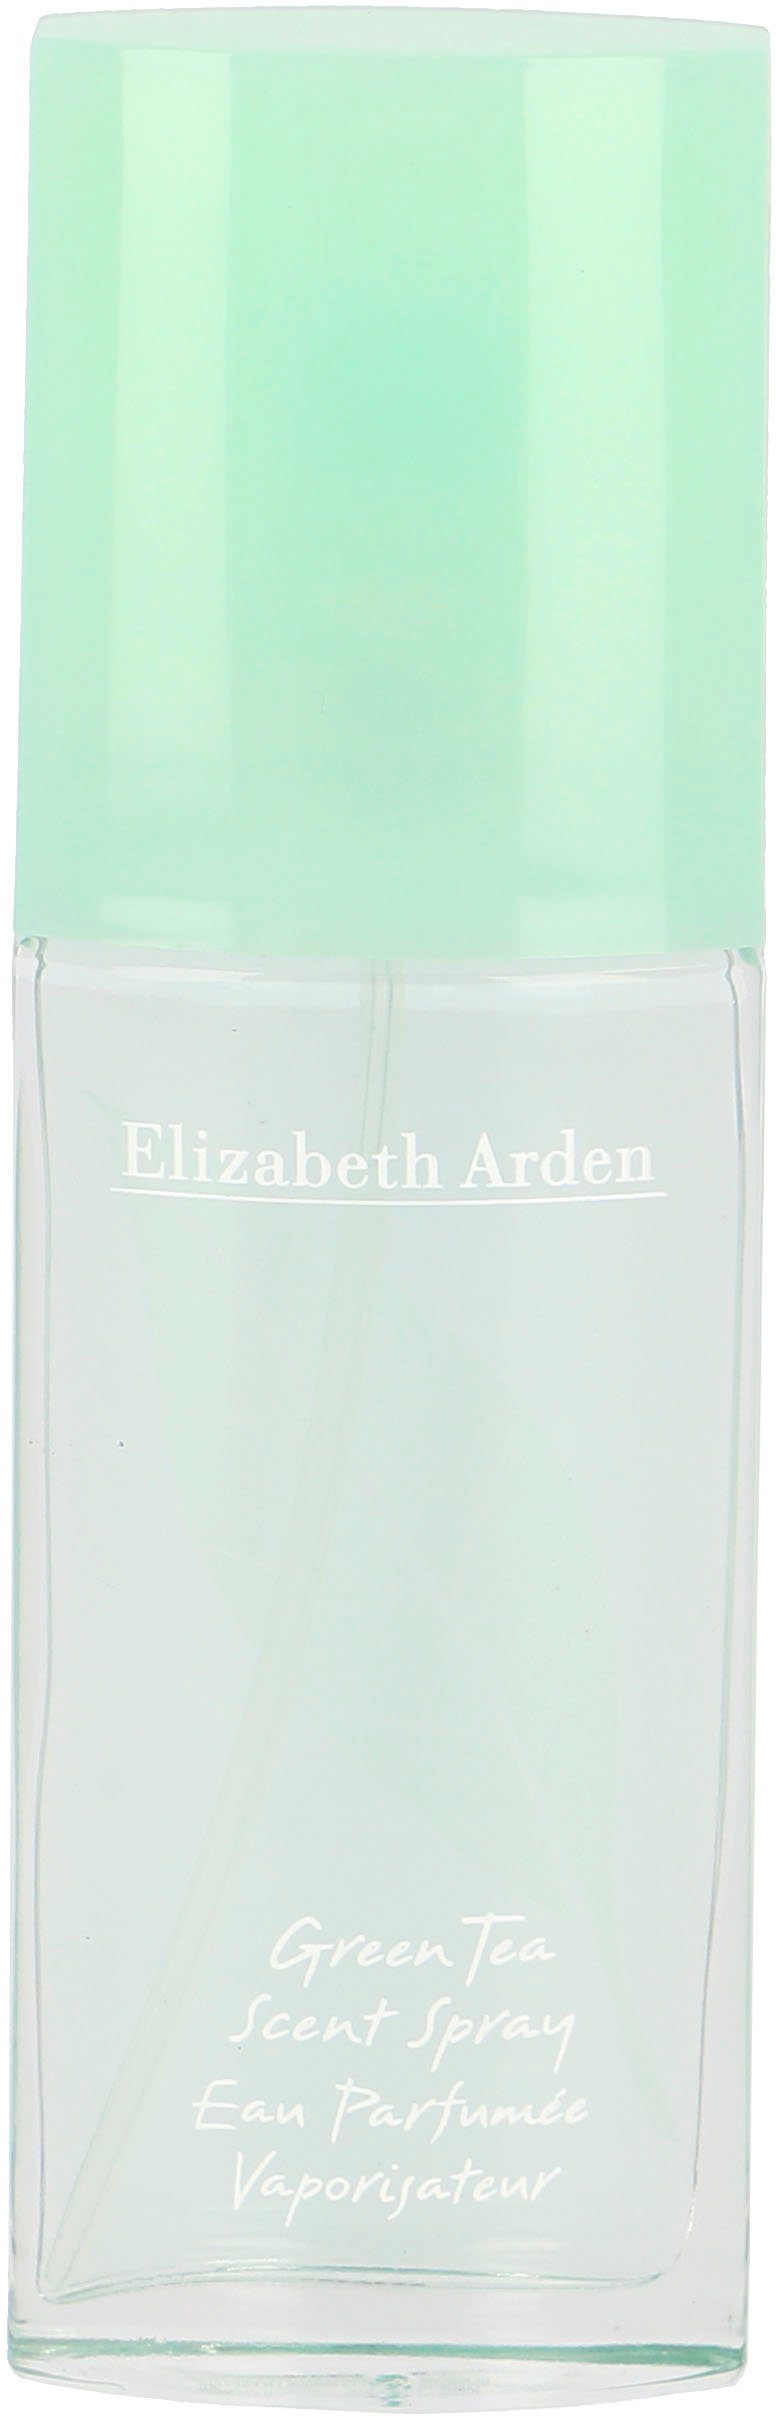 Elizabeth Arden Eau de Green Tea Toilette